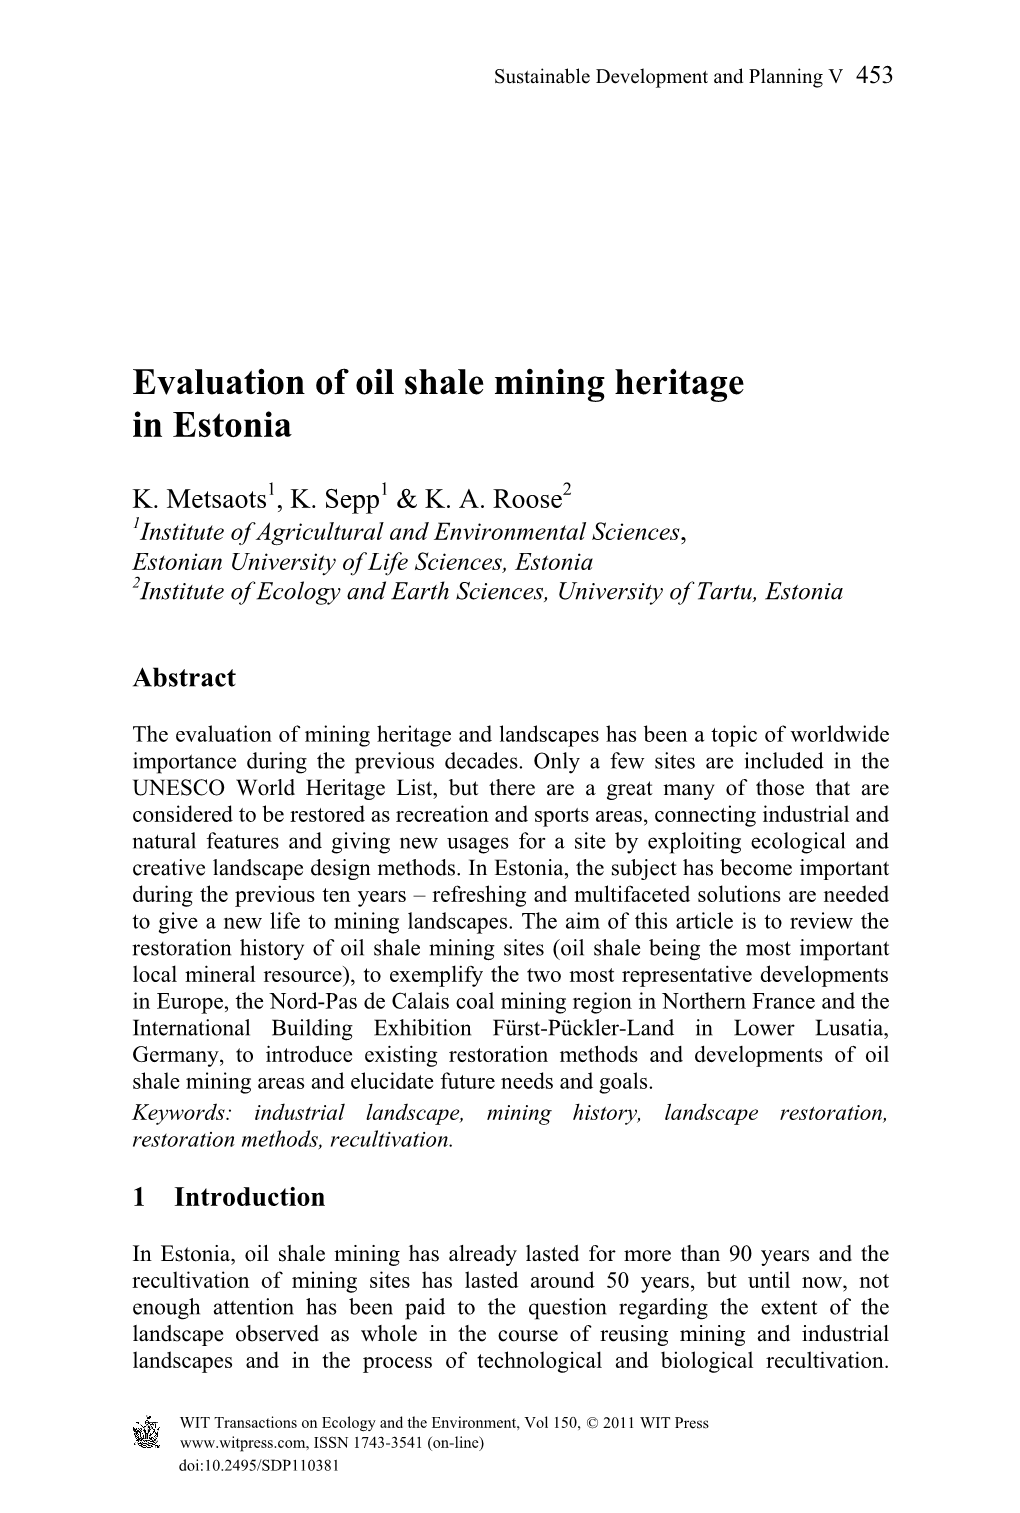 Evaluation of Oil Shale Mining Heritage in Estonia